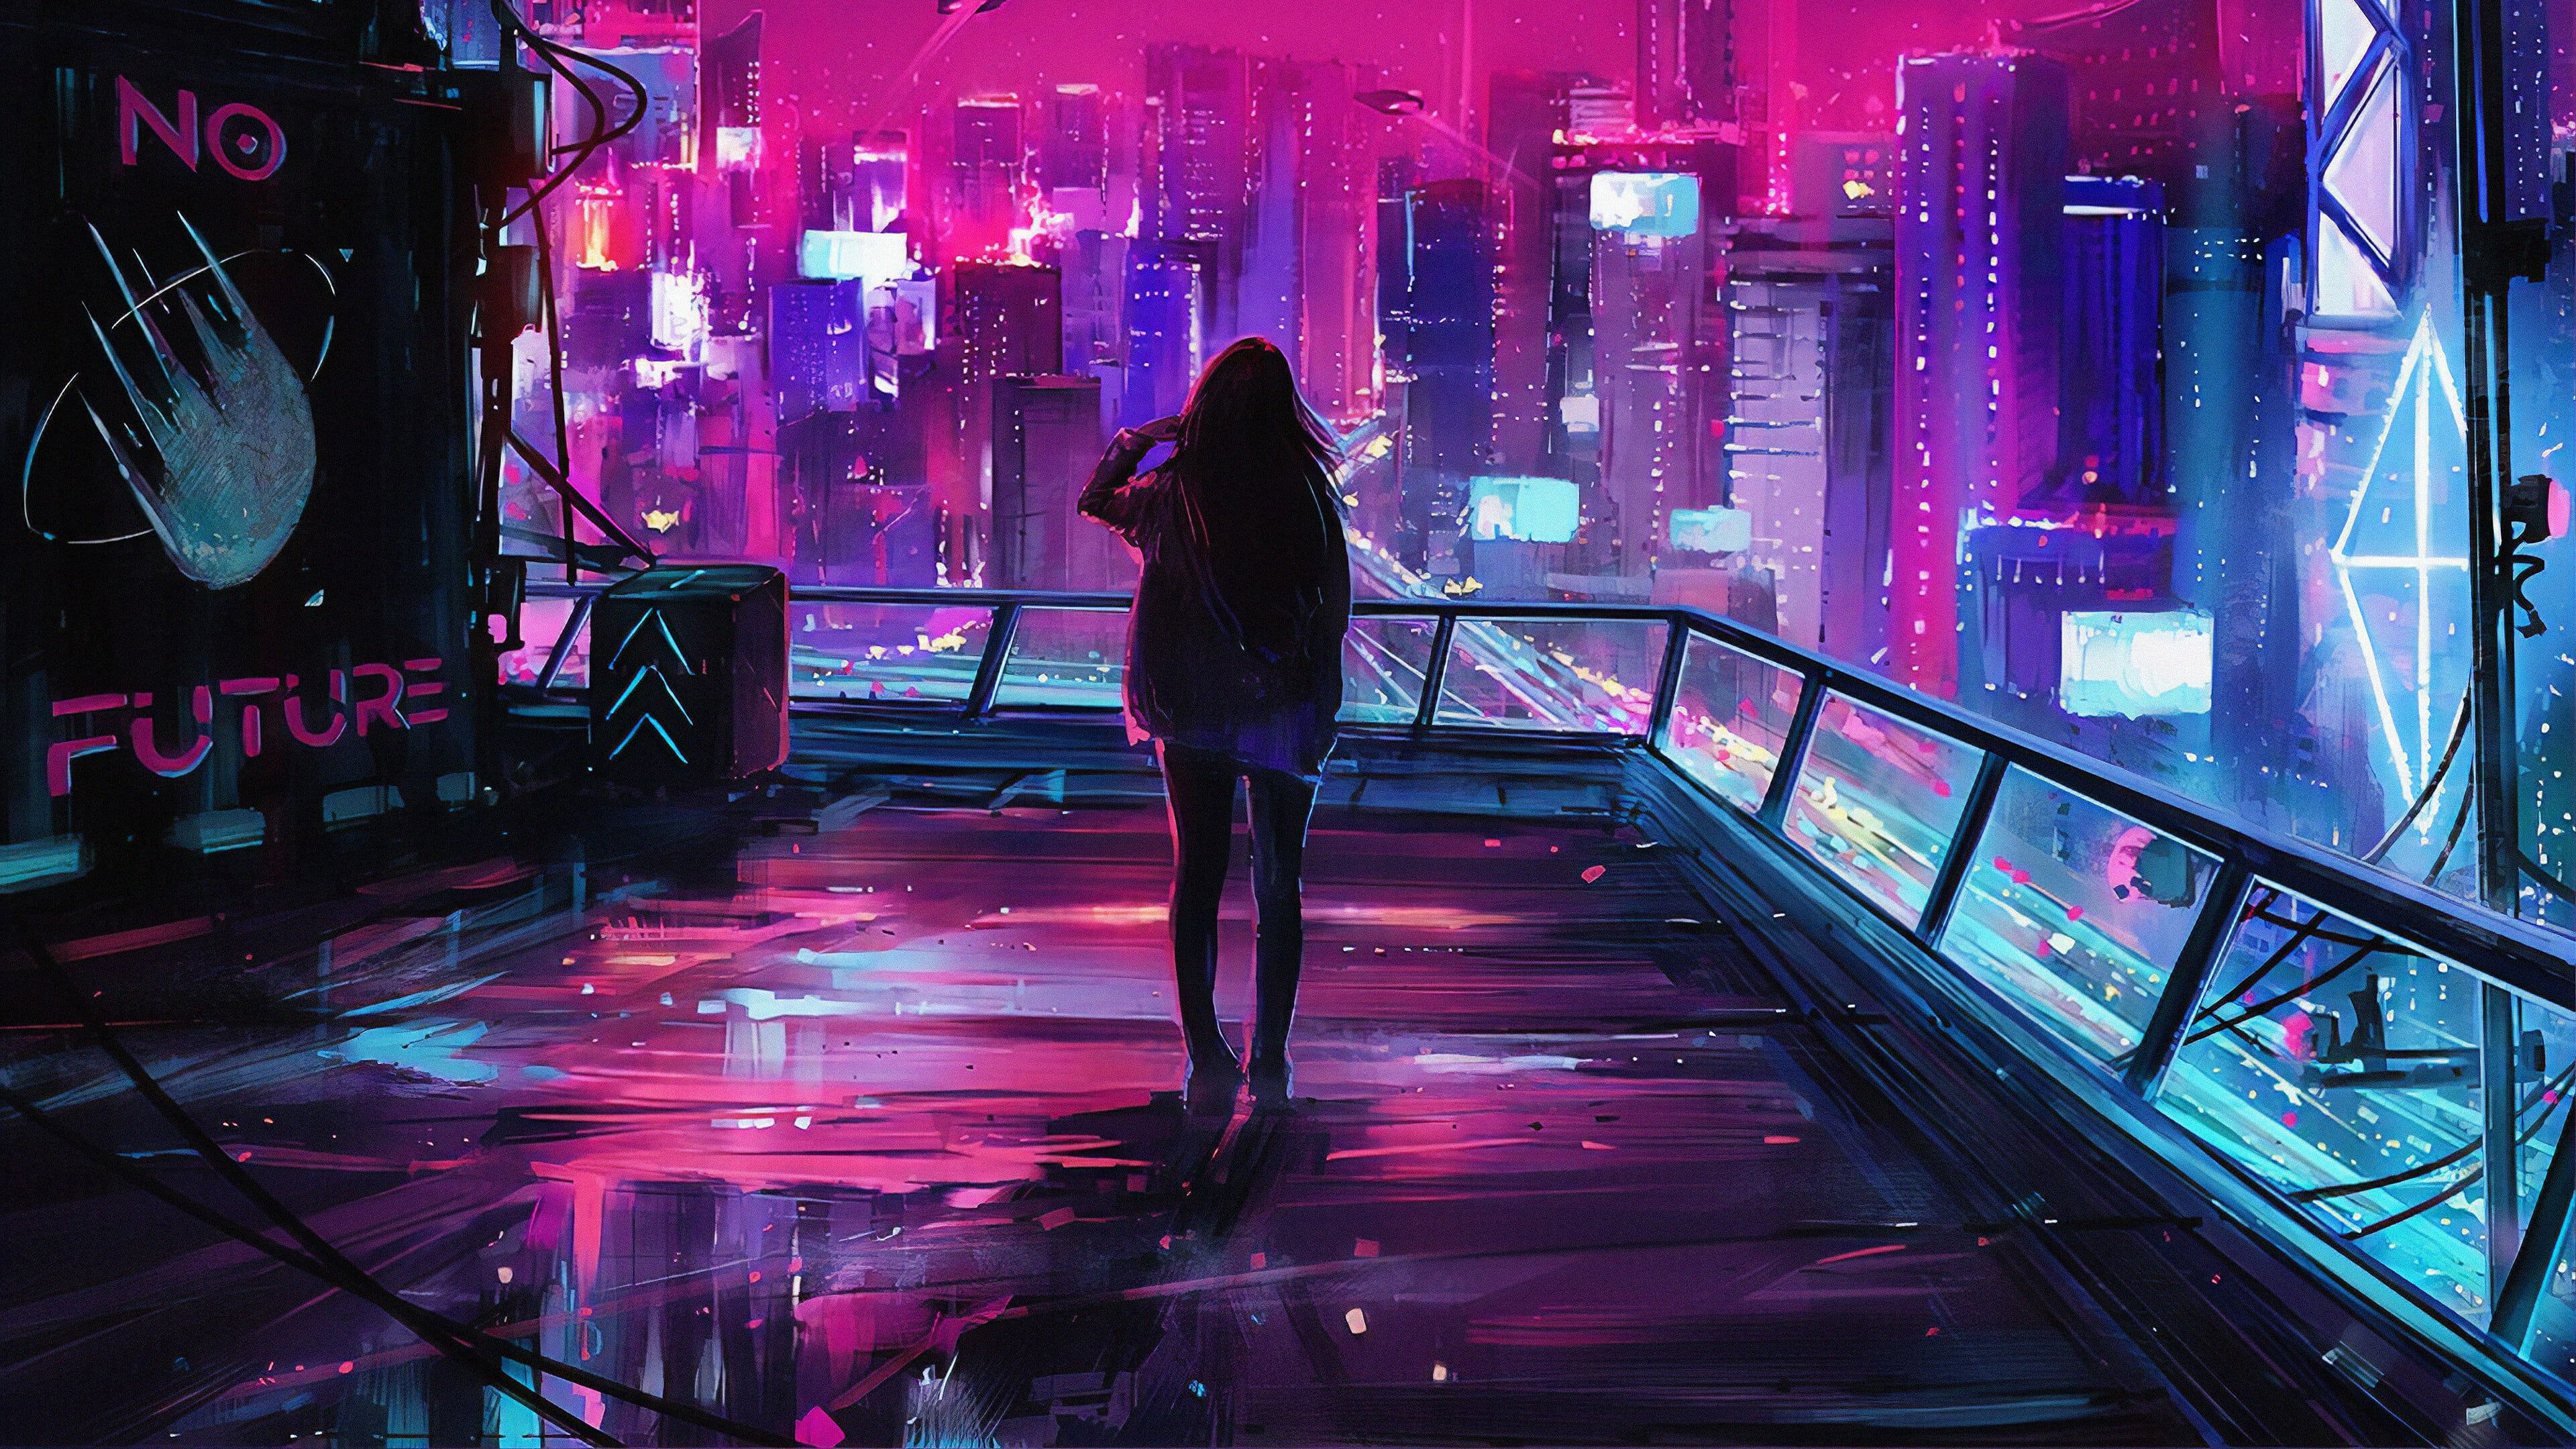 HD wallpaper: digital art, artwork, cyberpunk, science fiction, city. Cyberpunk city, City wallpaper, Neon cyberpunk